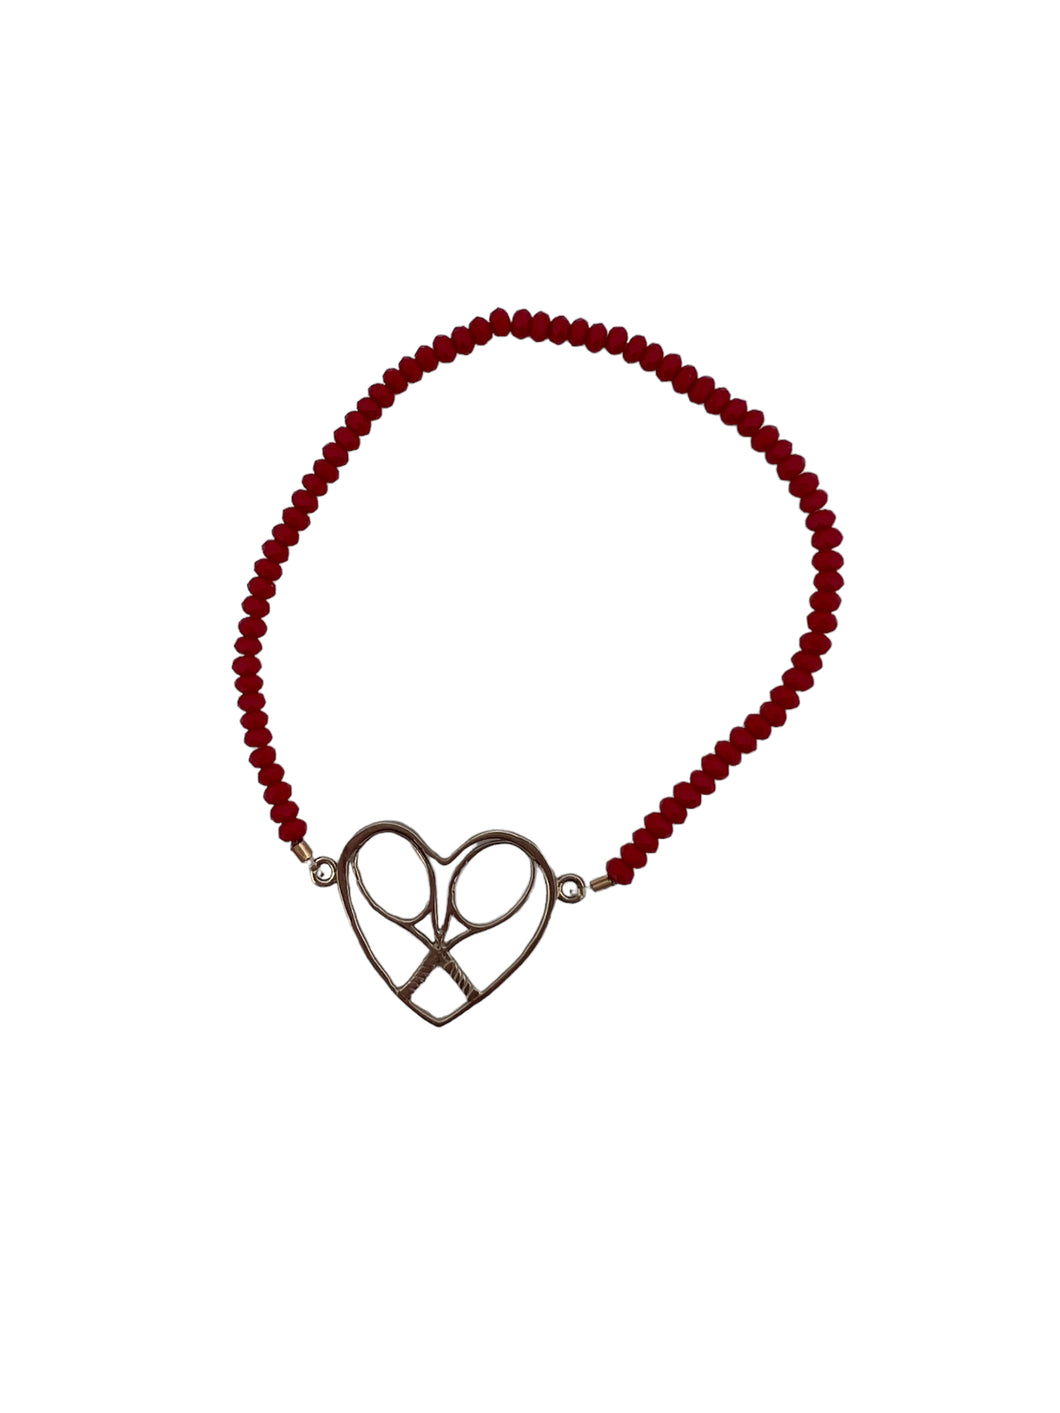 Gold Heart + Rackets Bracelet with Jade Beads